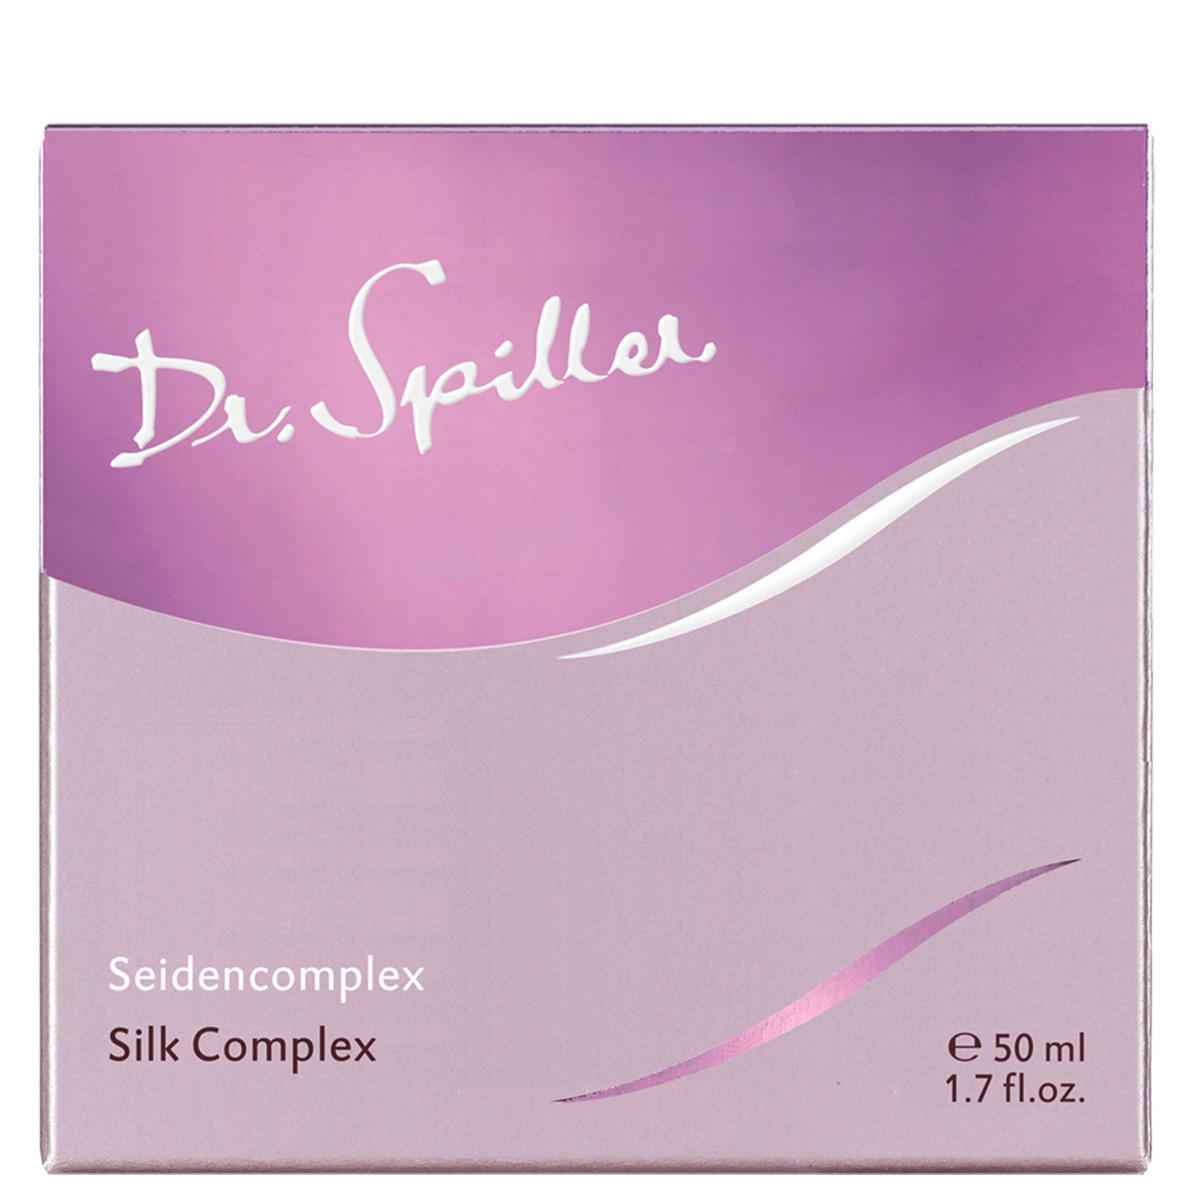 Dr. Spiller Biomimetic SkinCare Complexe De Soie 50 ml - 3